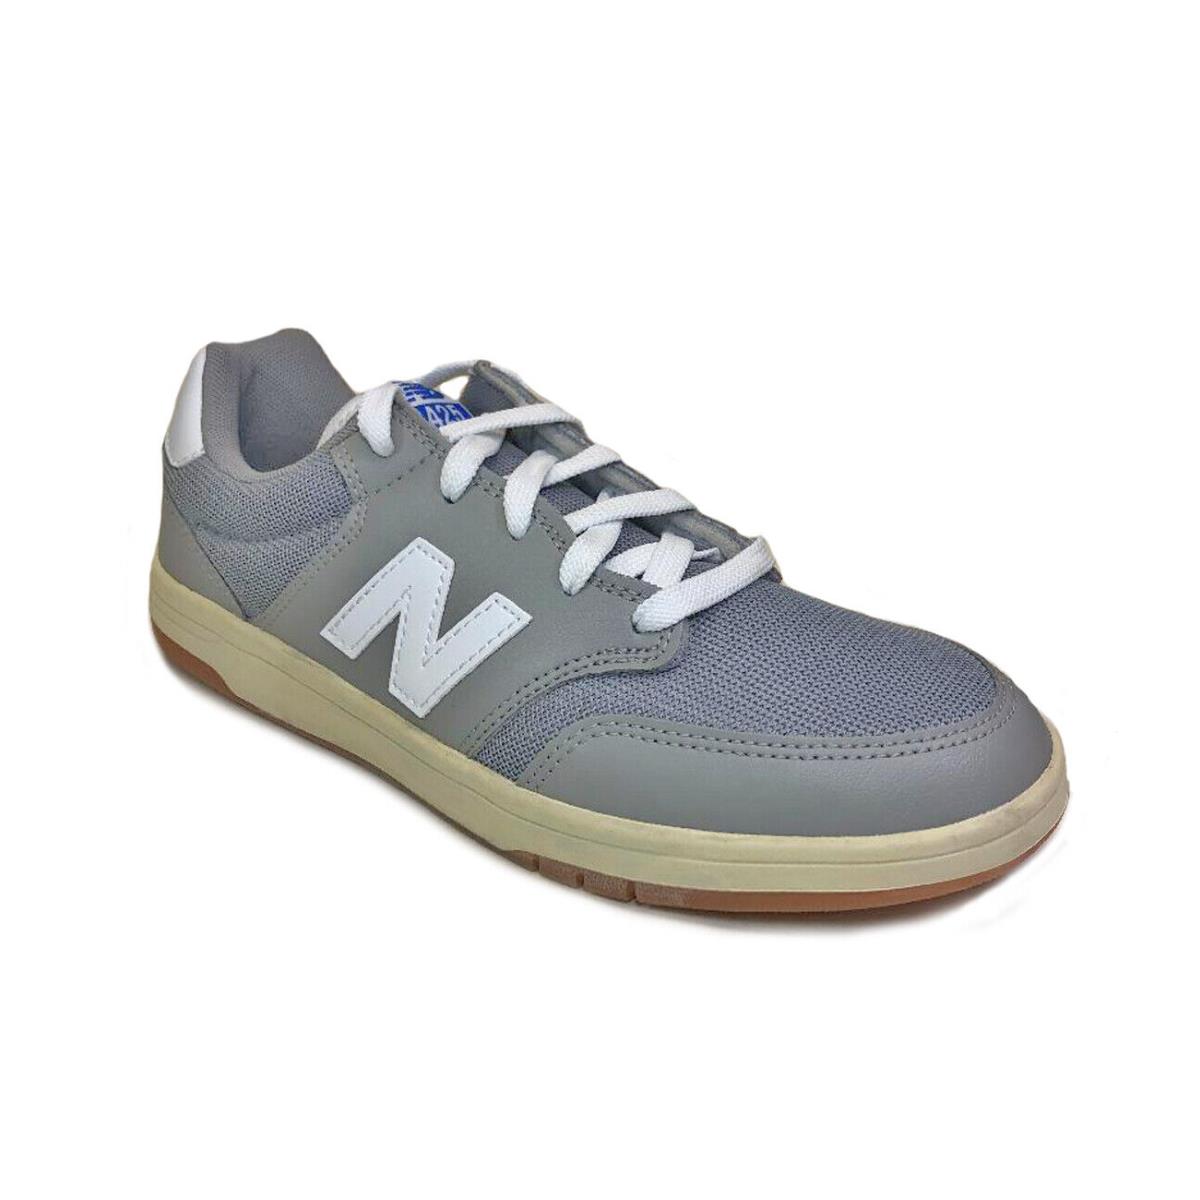 New Balance AM425 Grey Sneaker Shoes